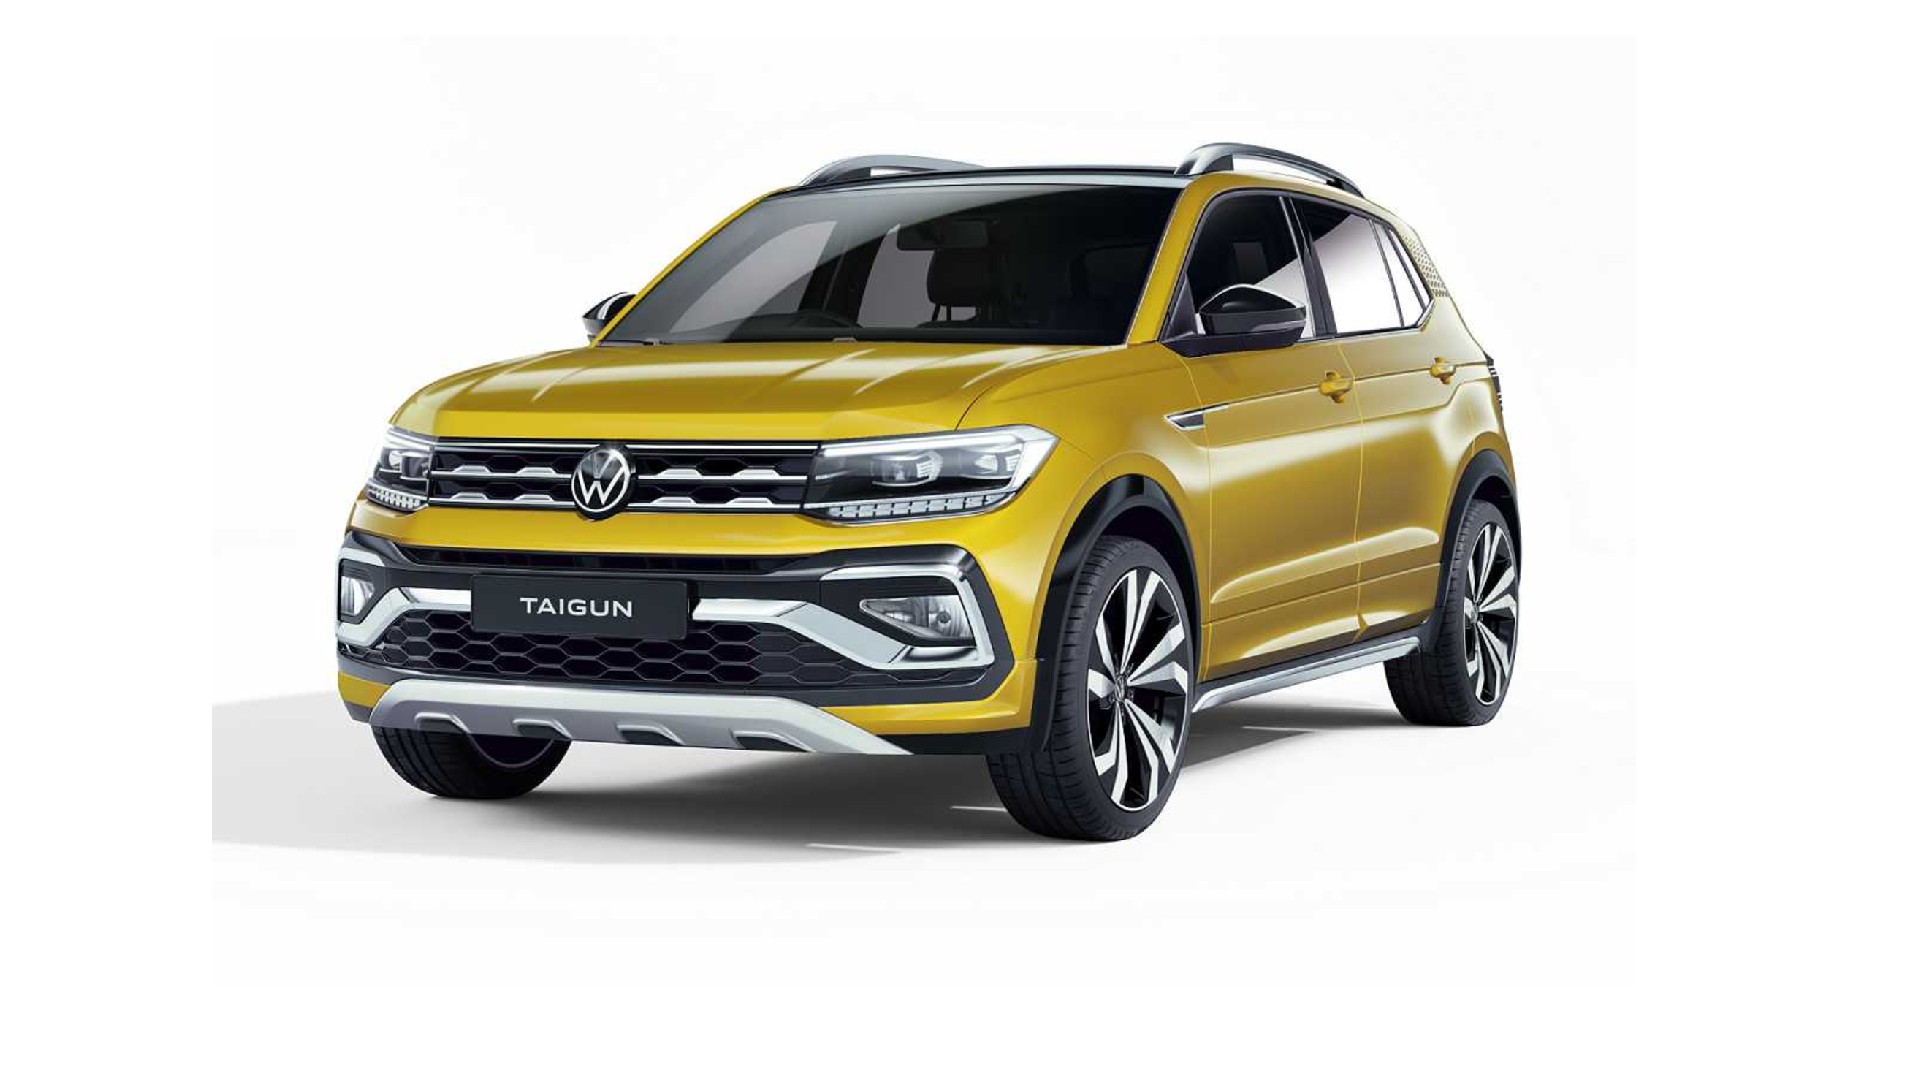 Volkswagen Taigun Will Be “Safest, Strongly Built SUV” In Segment